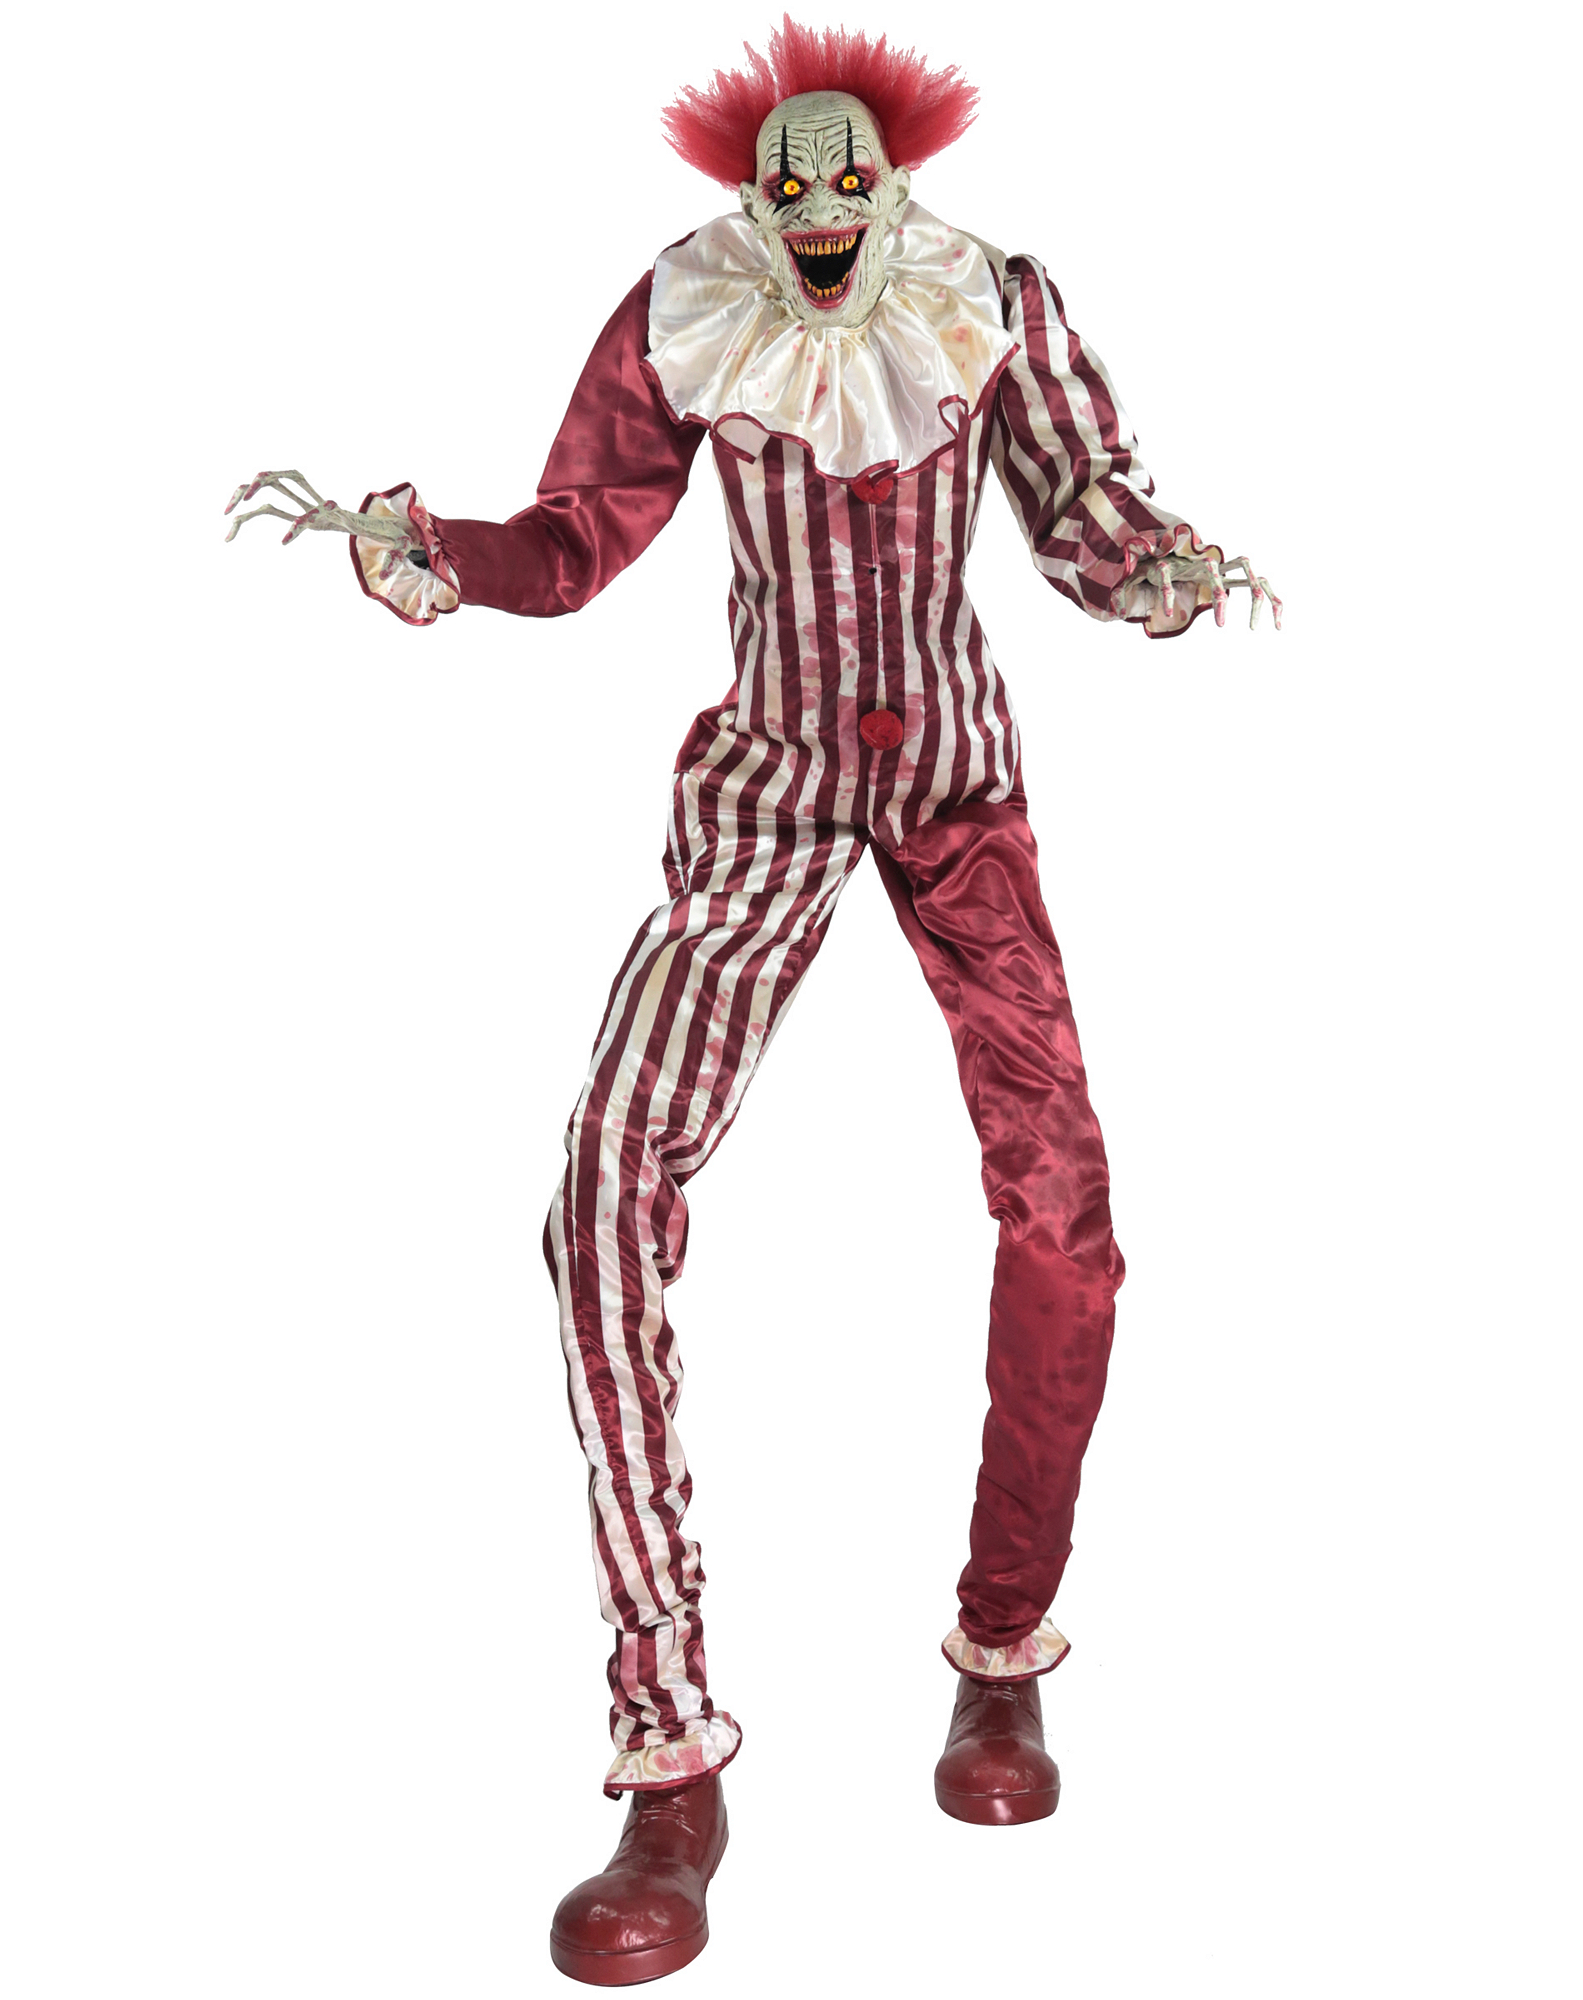 Featured image of post Spirit Halloween Clown Animatronic Theme park walk 451 786 views6 months ago